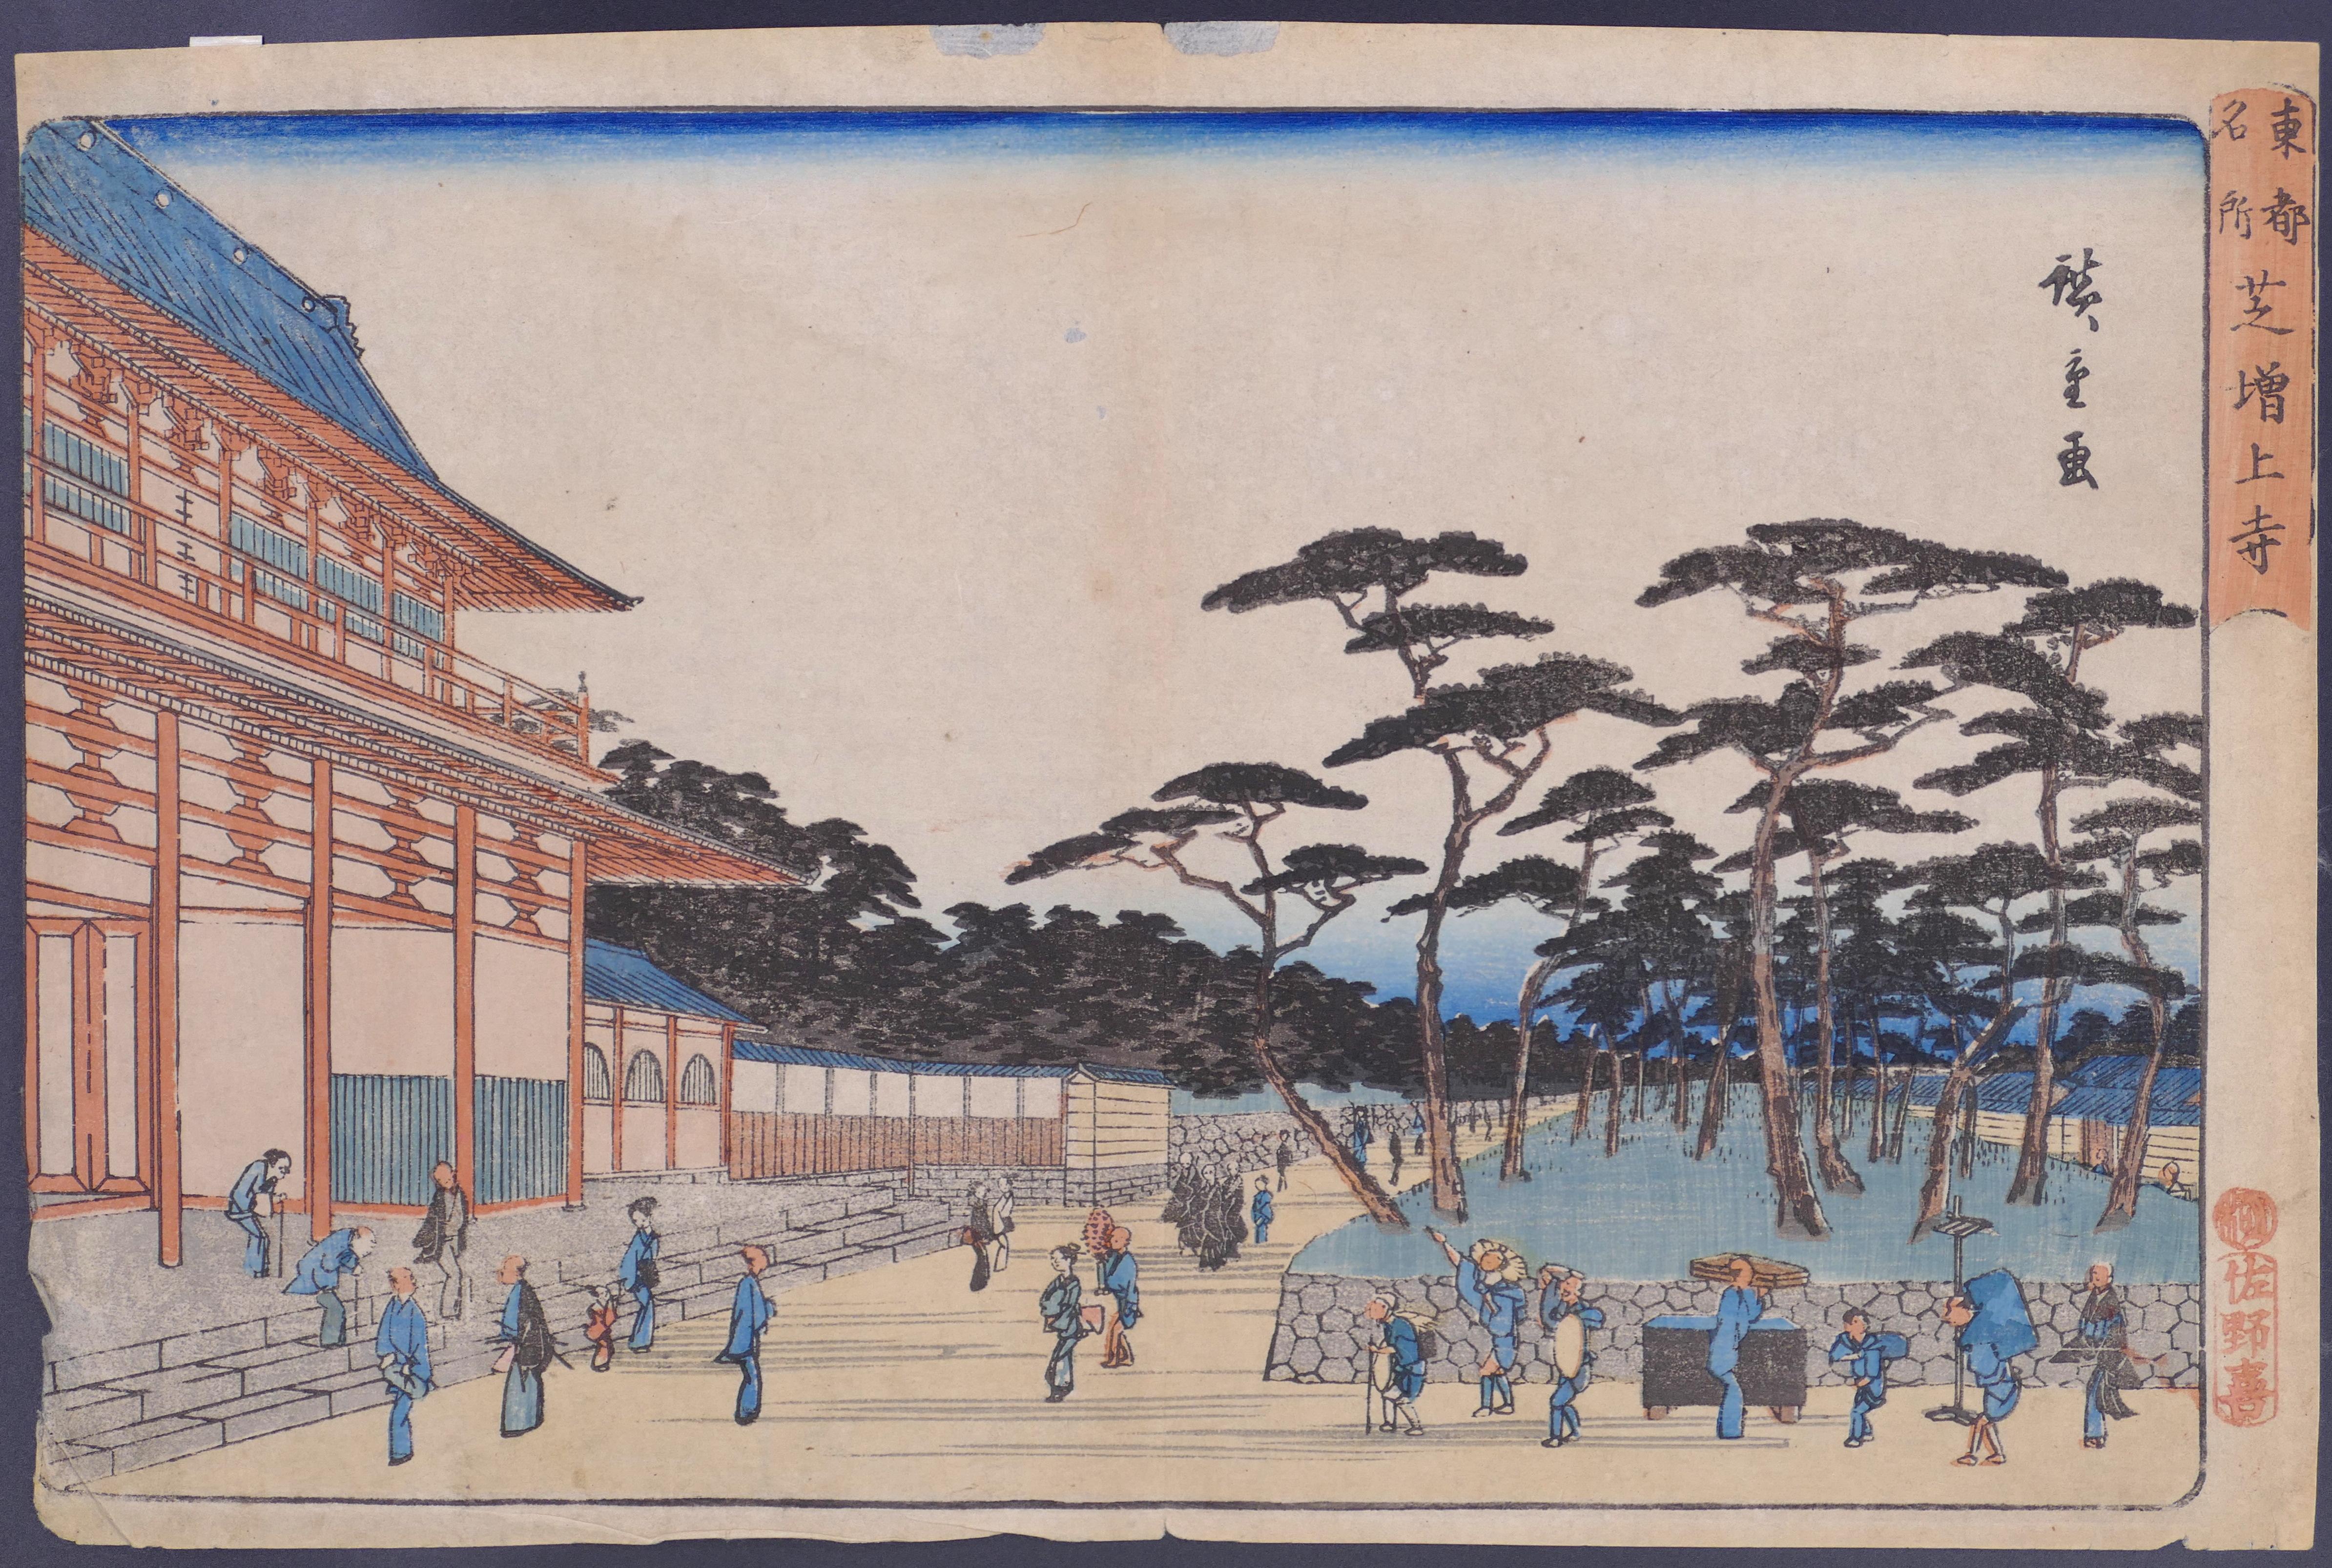 Utagawa Hiroshige (Ando Hiroshige) Figurative Print - View of Zojo-ji Temple in Shiba - by Hiroshige Utagawa - 1850s